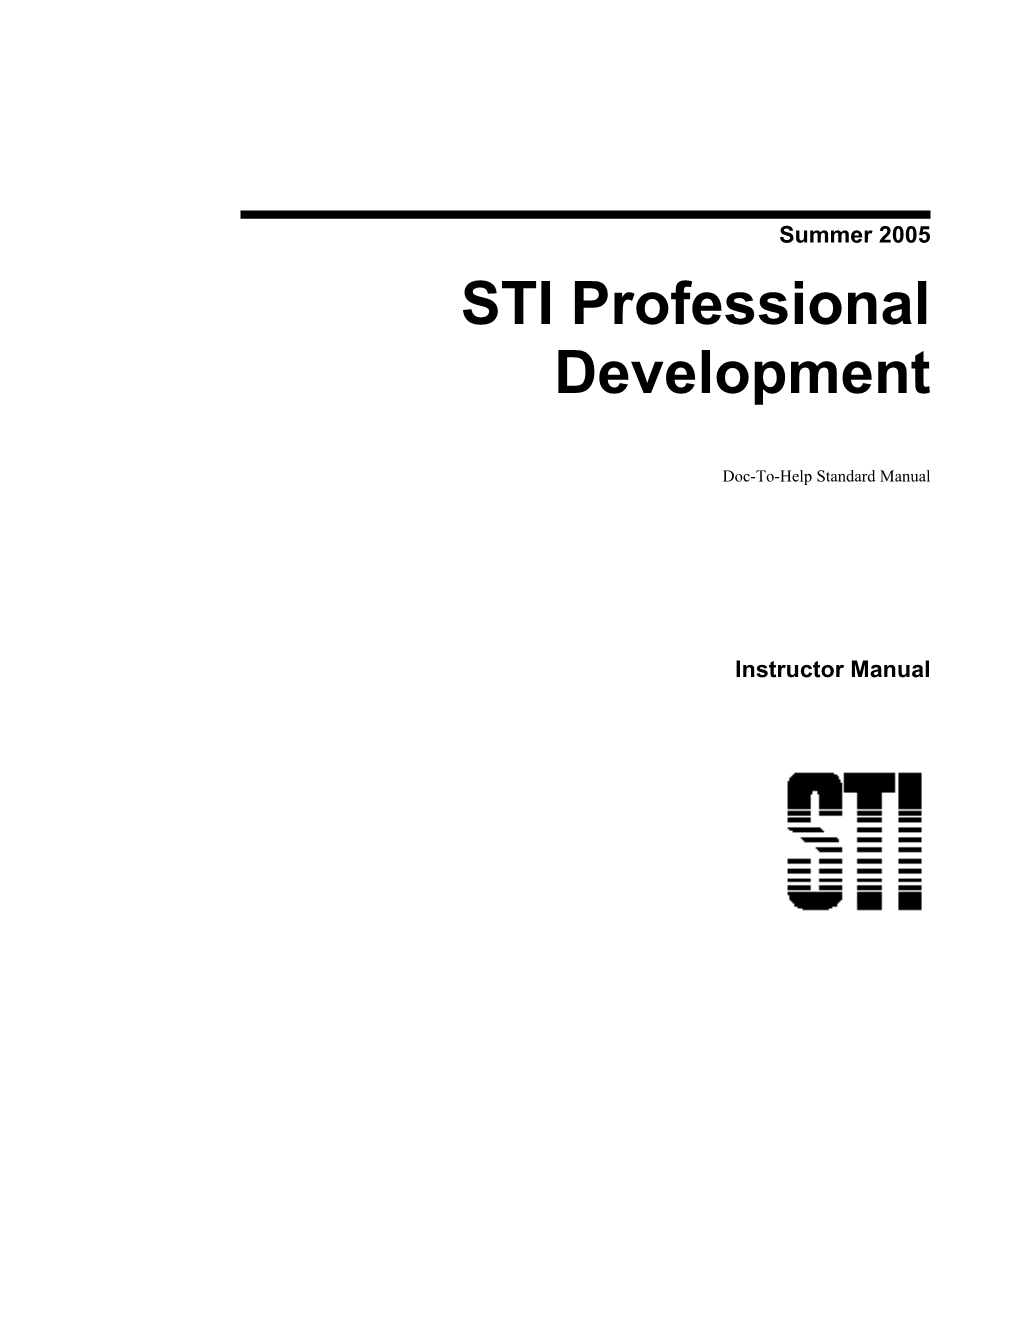 Data Support System STI Professional Development